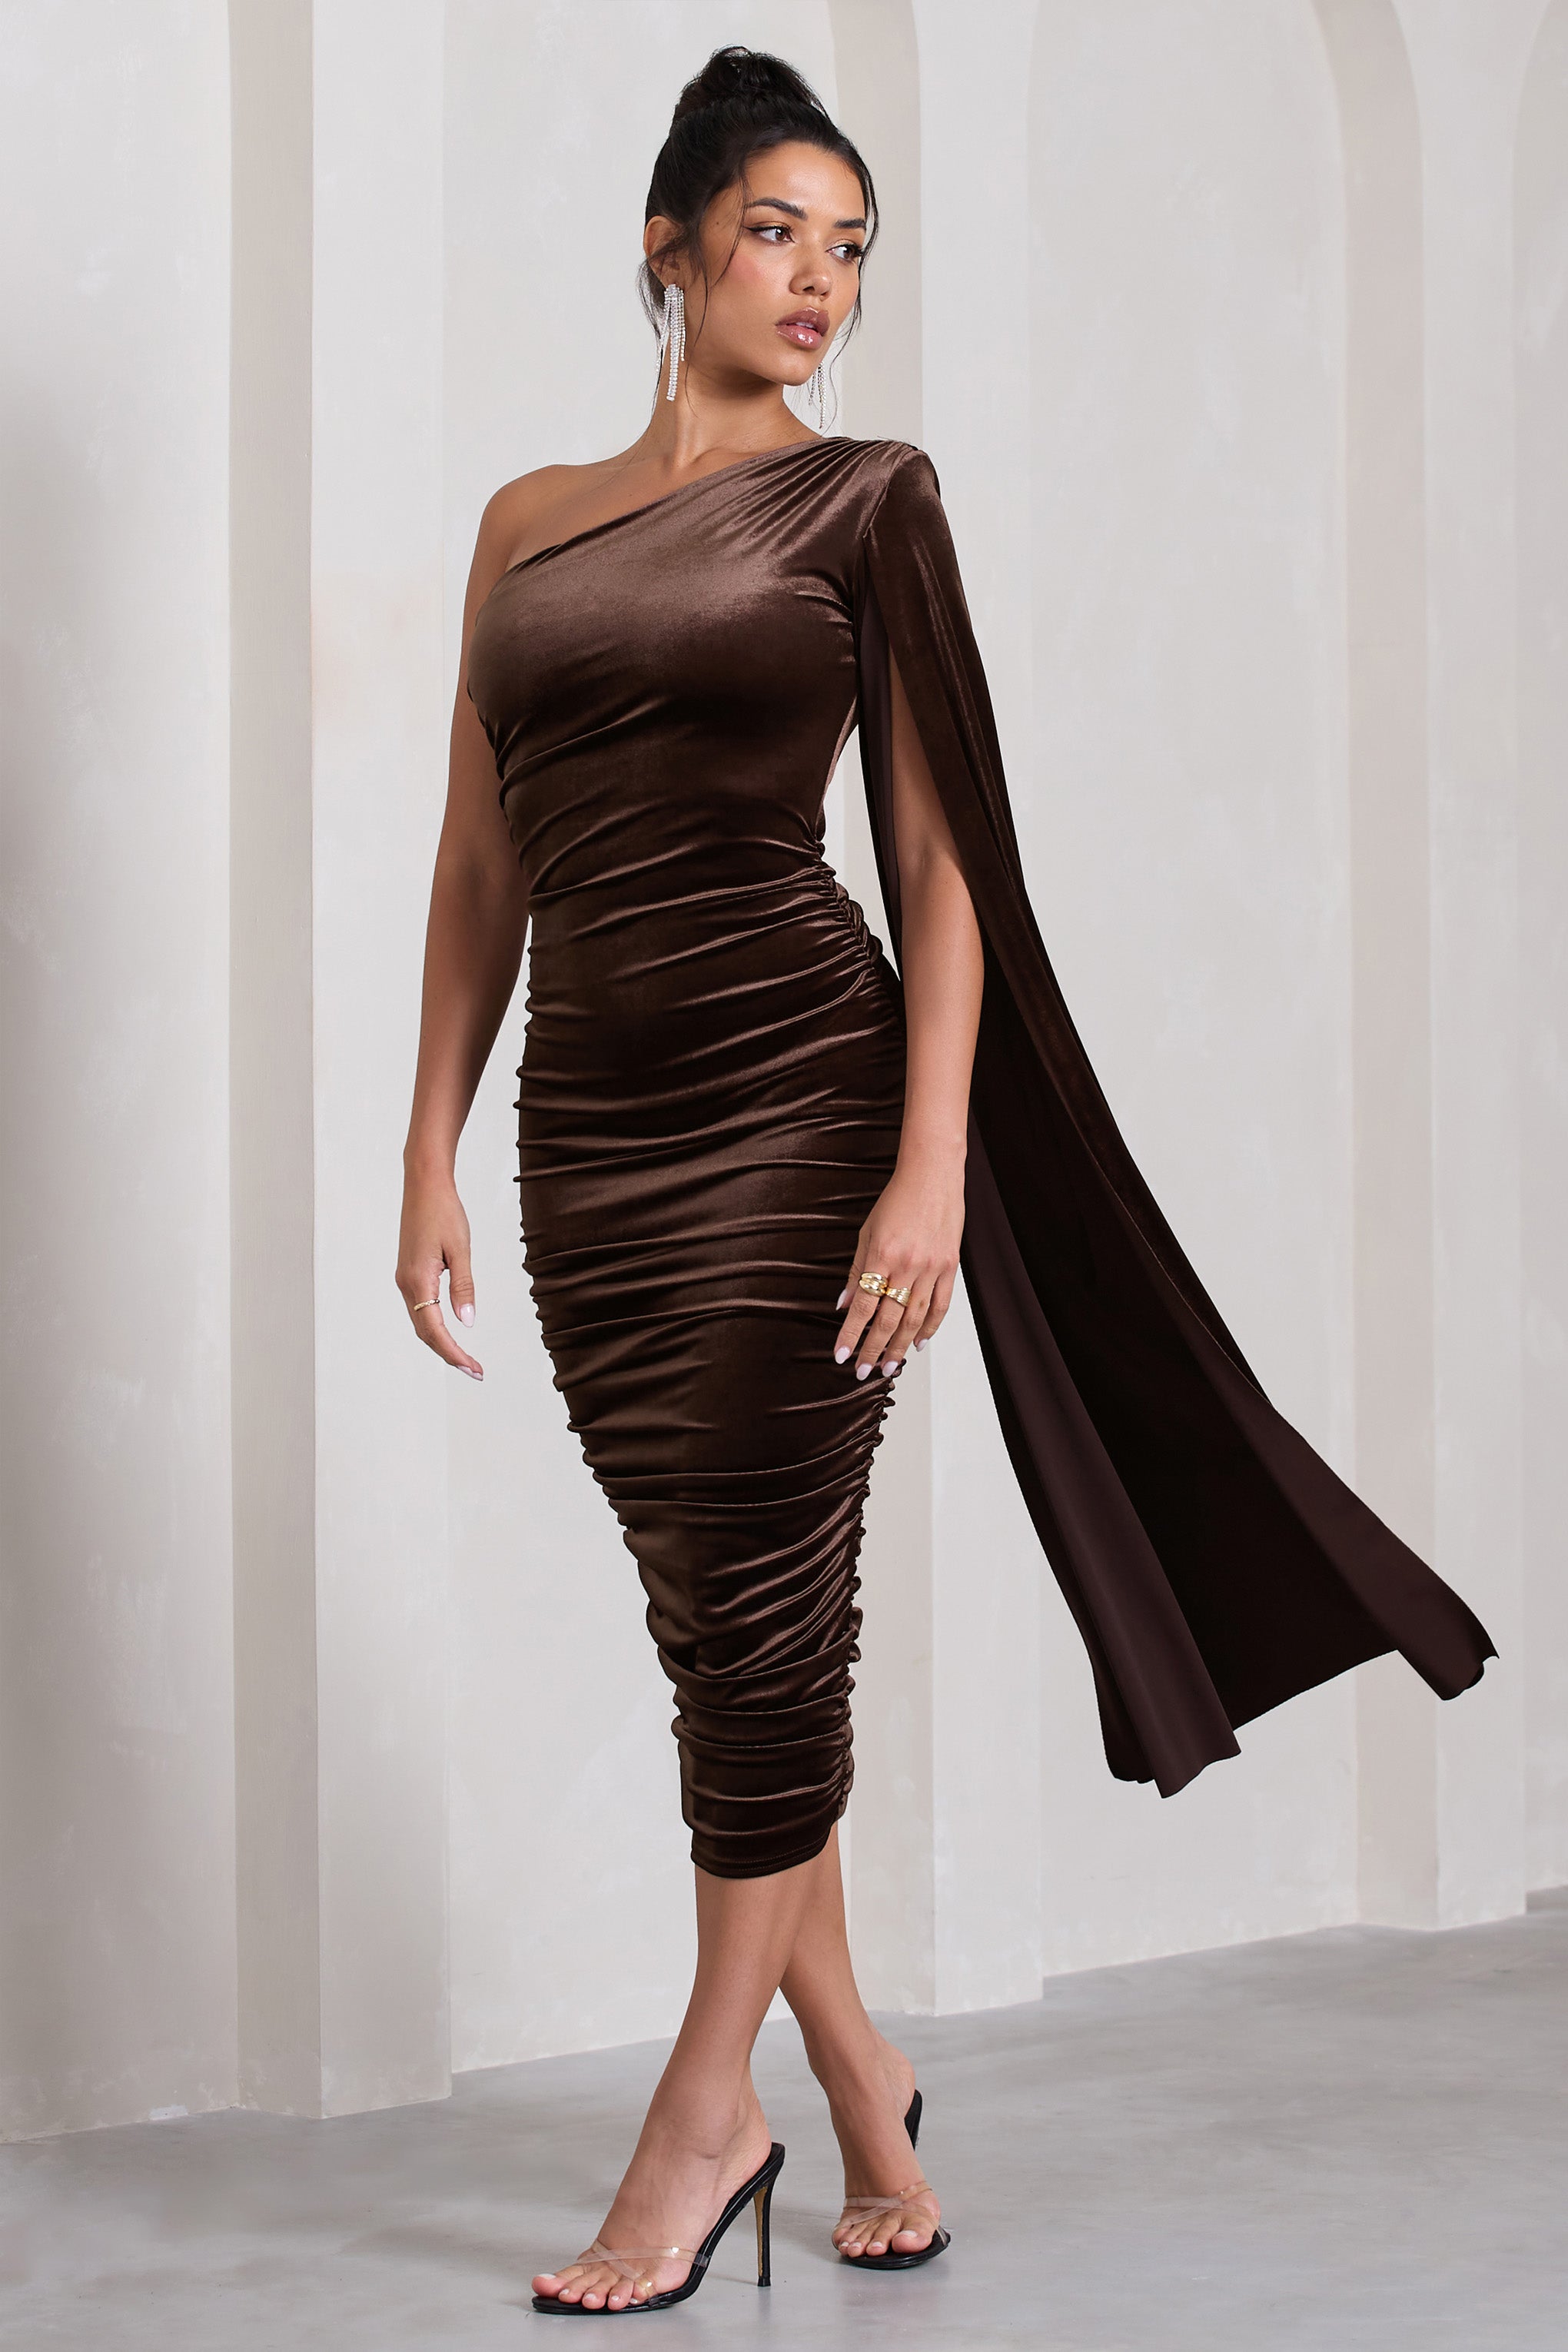 Gianna Chocolate Velvet One Shoulder Cape Bodycon Midi Dress